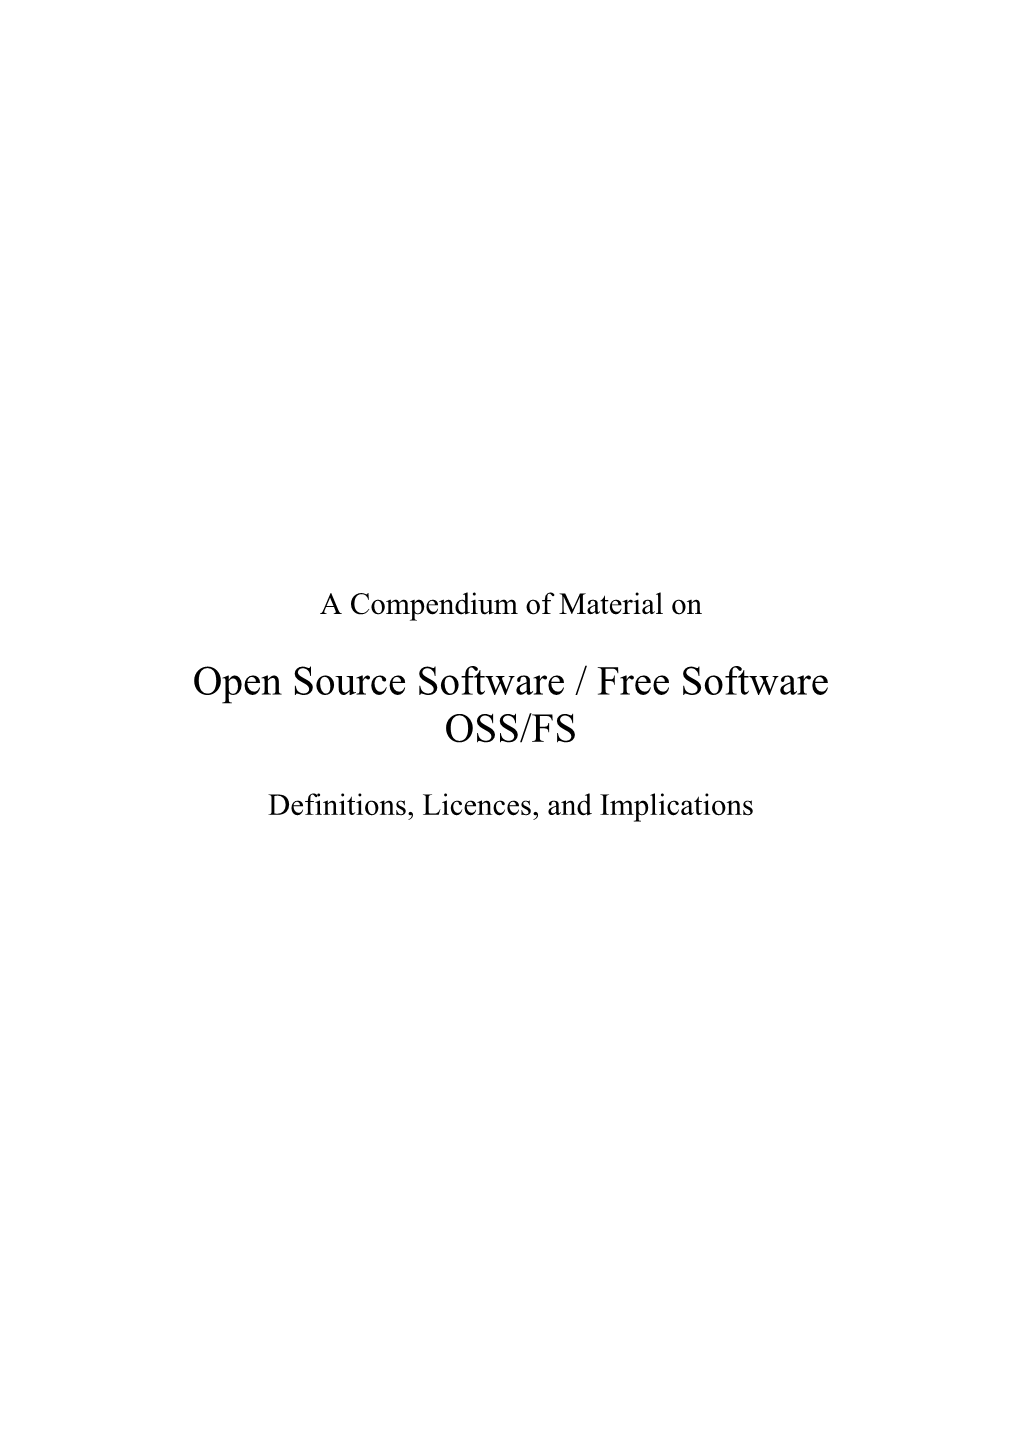 Compendium of Material of OSS/FS